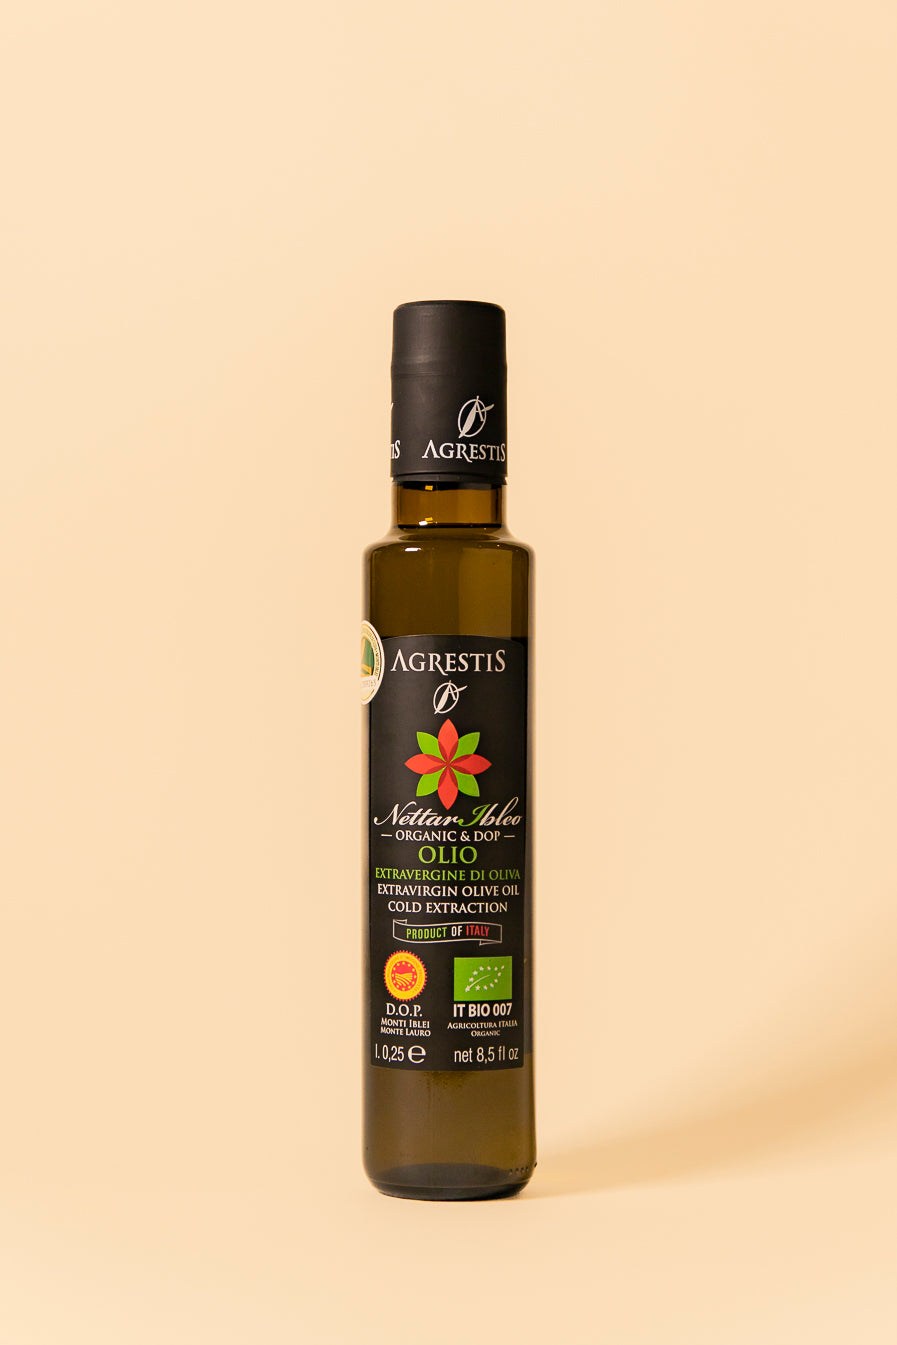 Agrestis | Nettar Ibleo BIO DOP Olive Oil 250ml